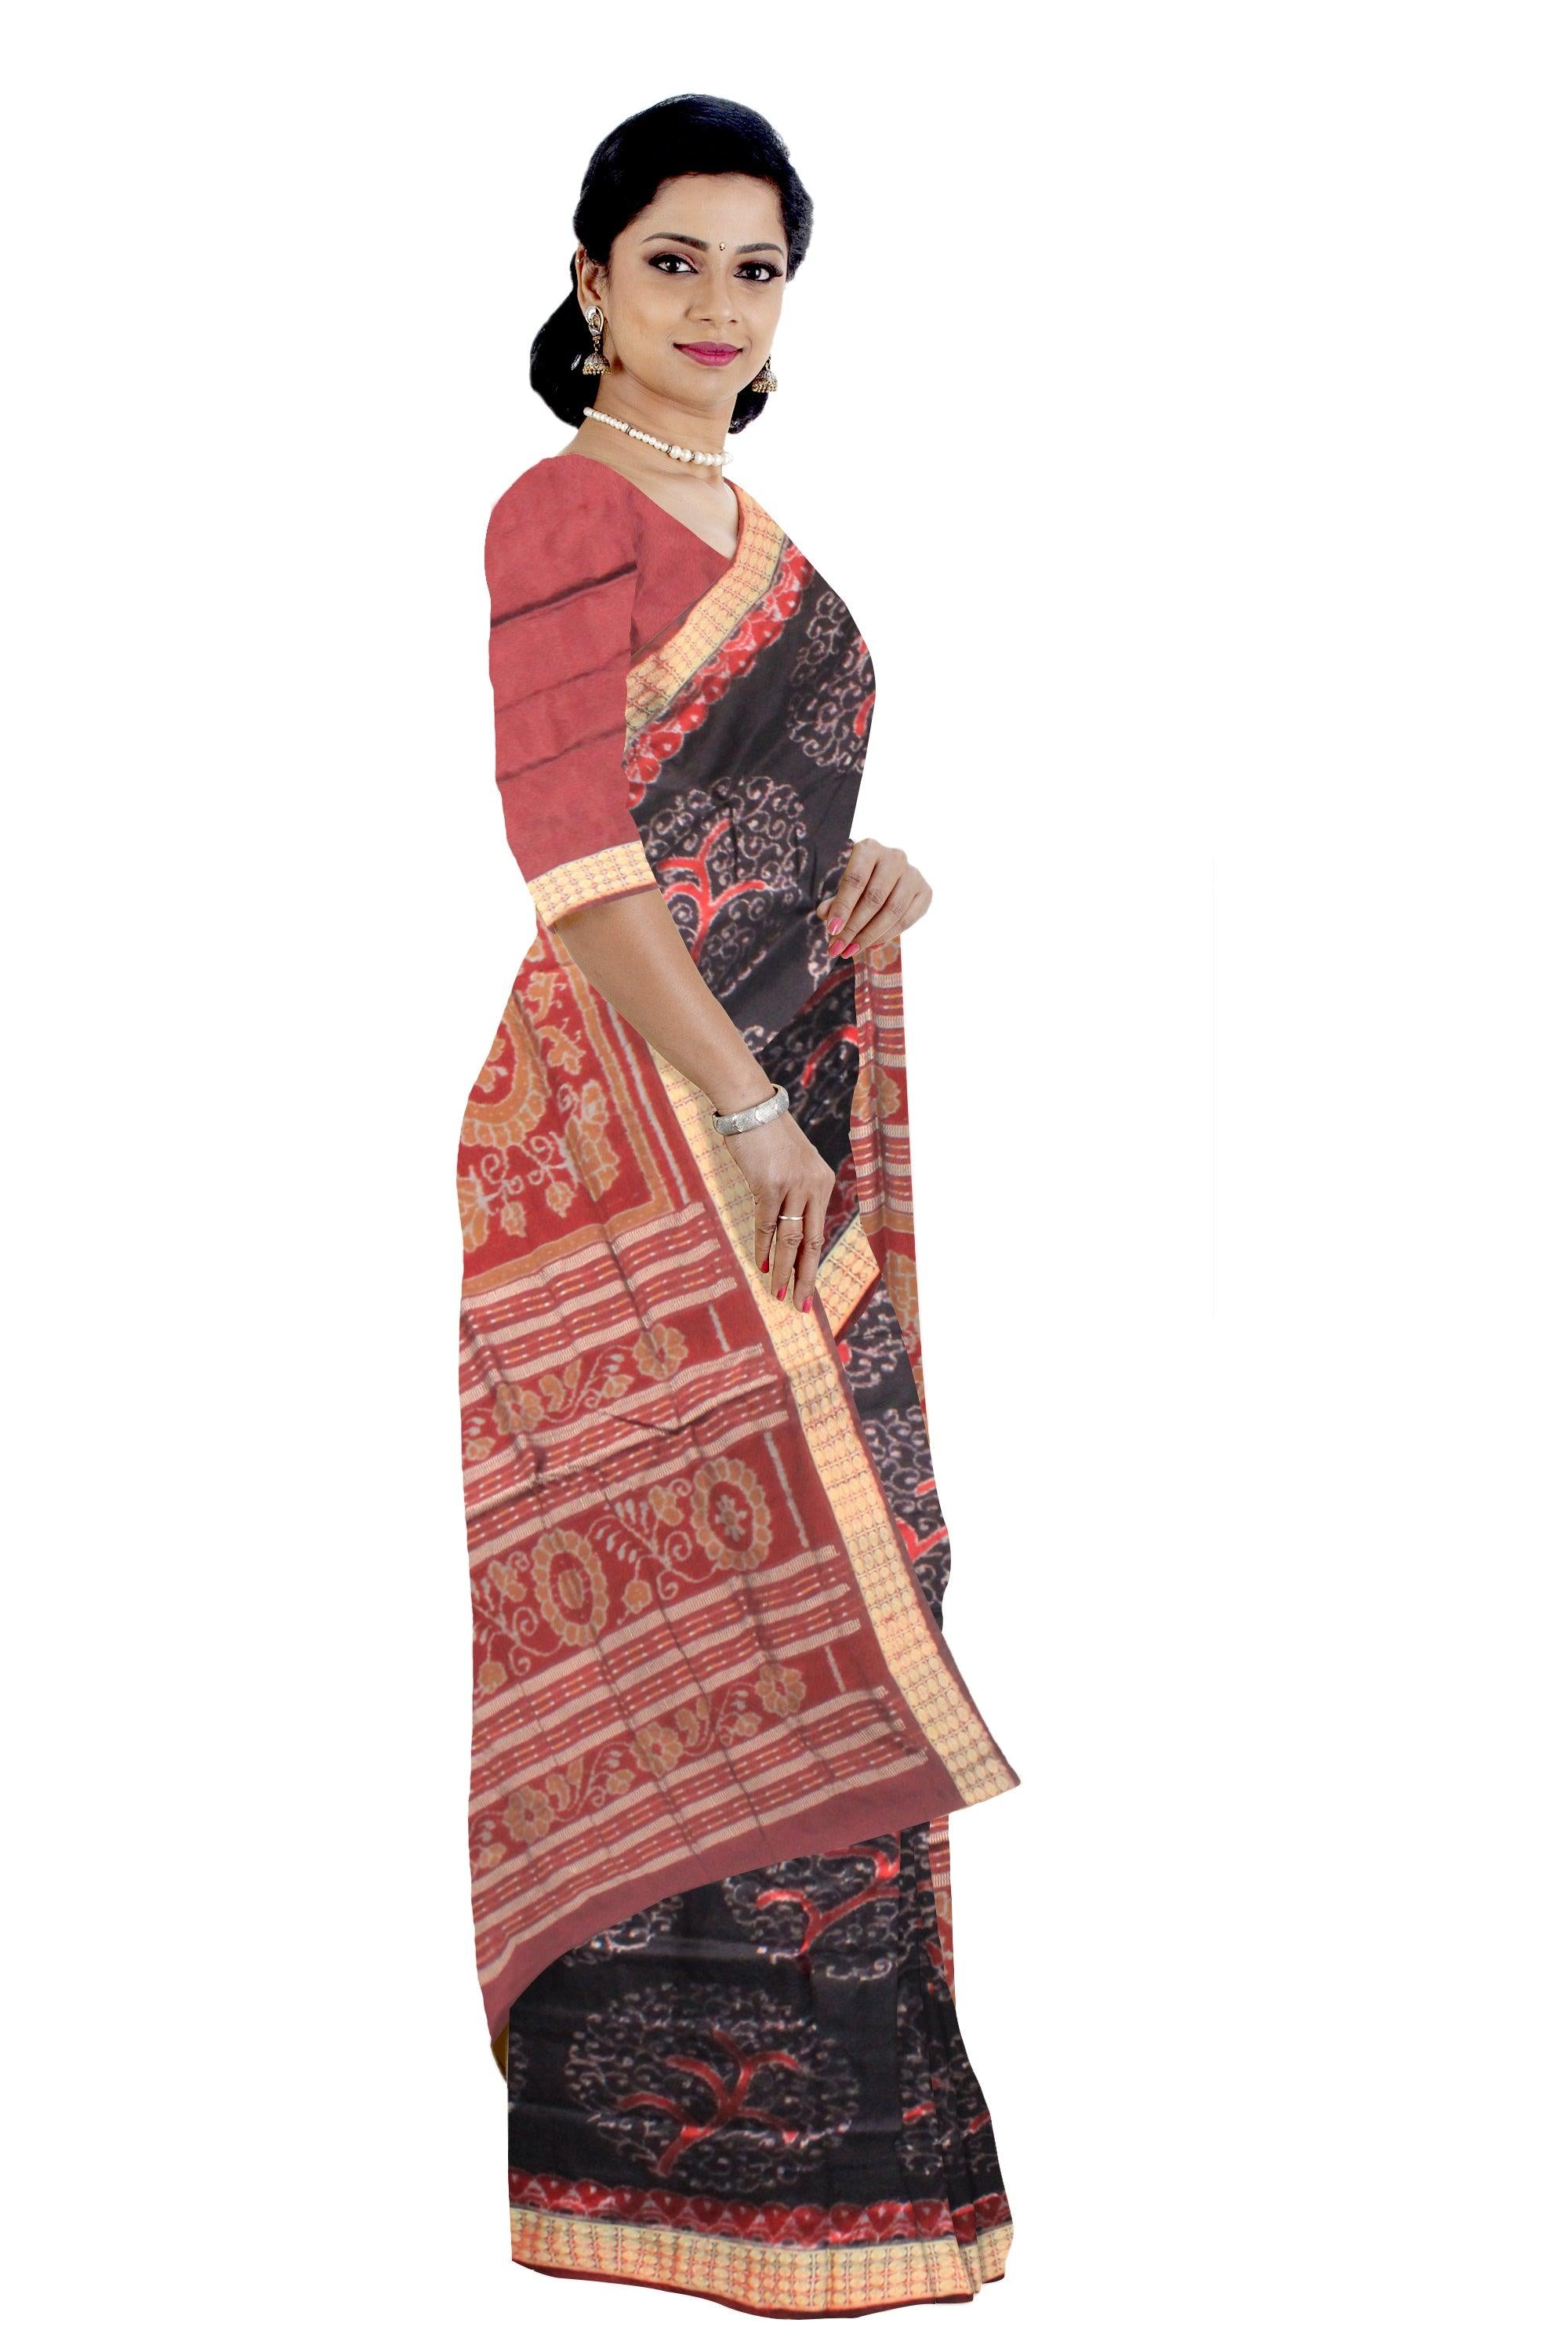 New Design ikat pattern Sambalpuri Pata Saree in  black and maroon  Color base, with black blouse piece . - Koshali Arts & Crafts Enterprise